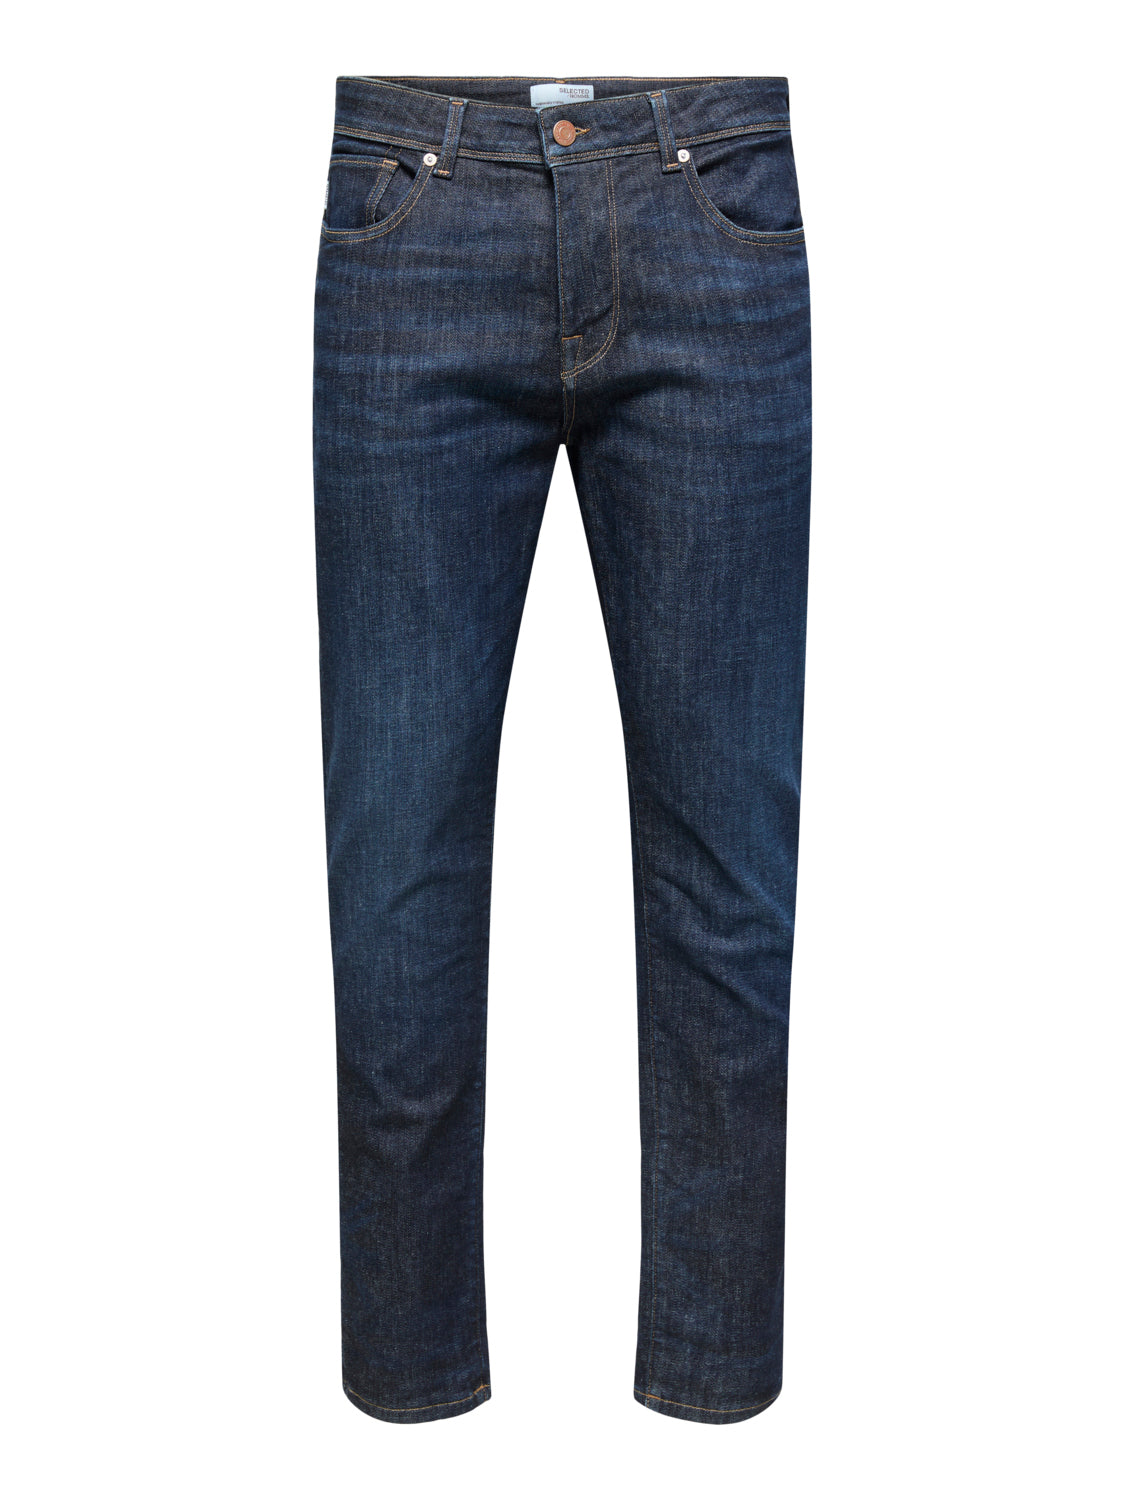 SELECTED HOMME - SLIM-LEON 6291 Jeans - Dark Blue Denim